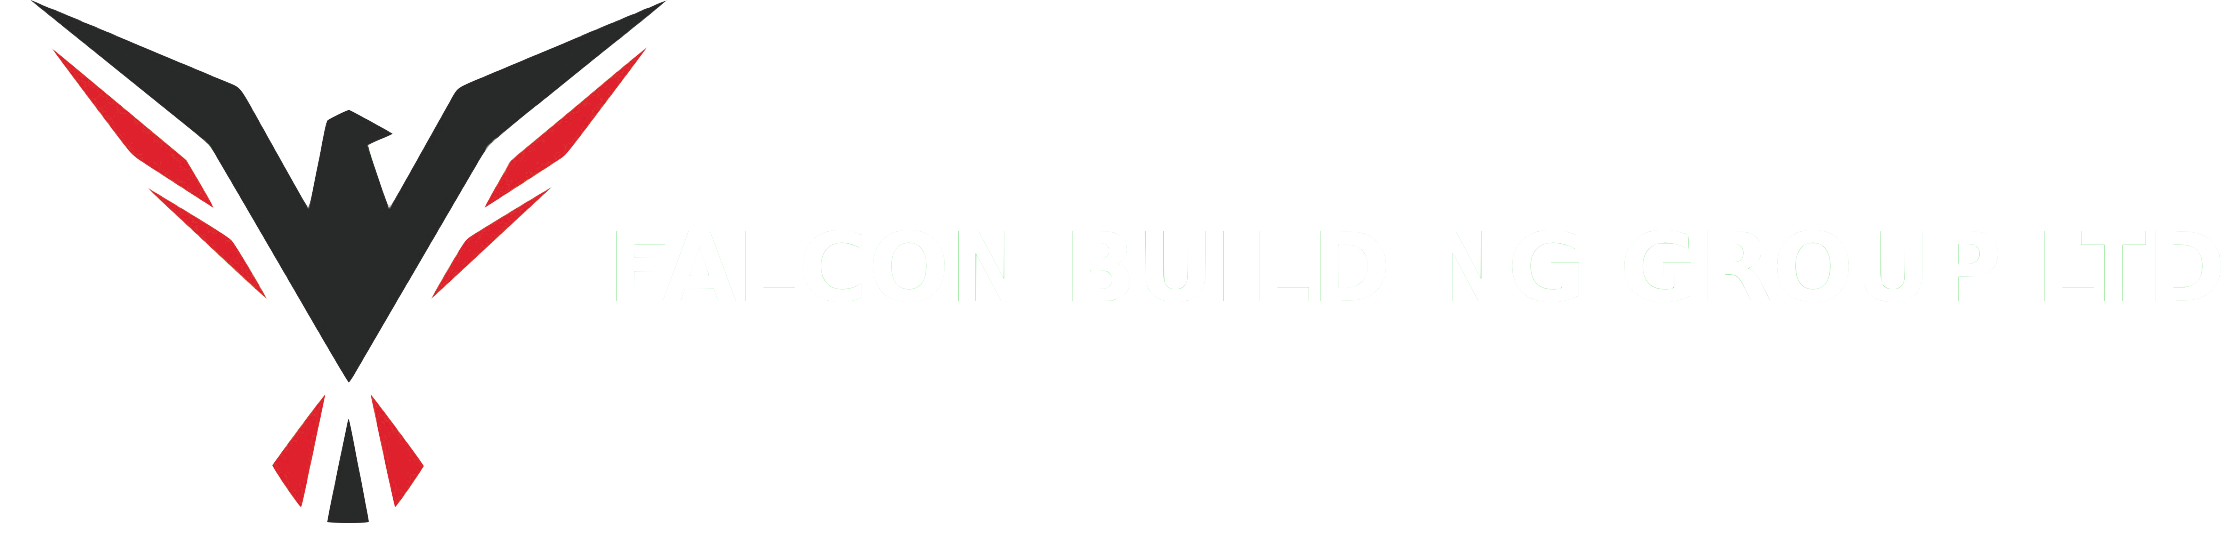 Falcon Building LTD Company Logo